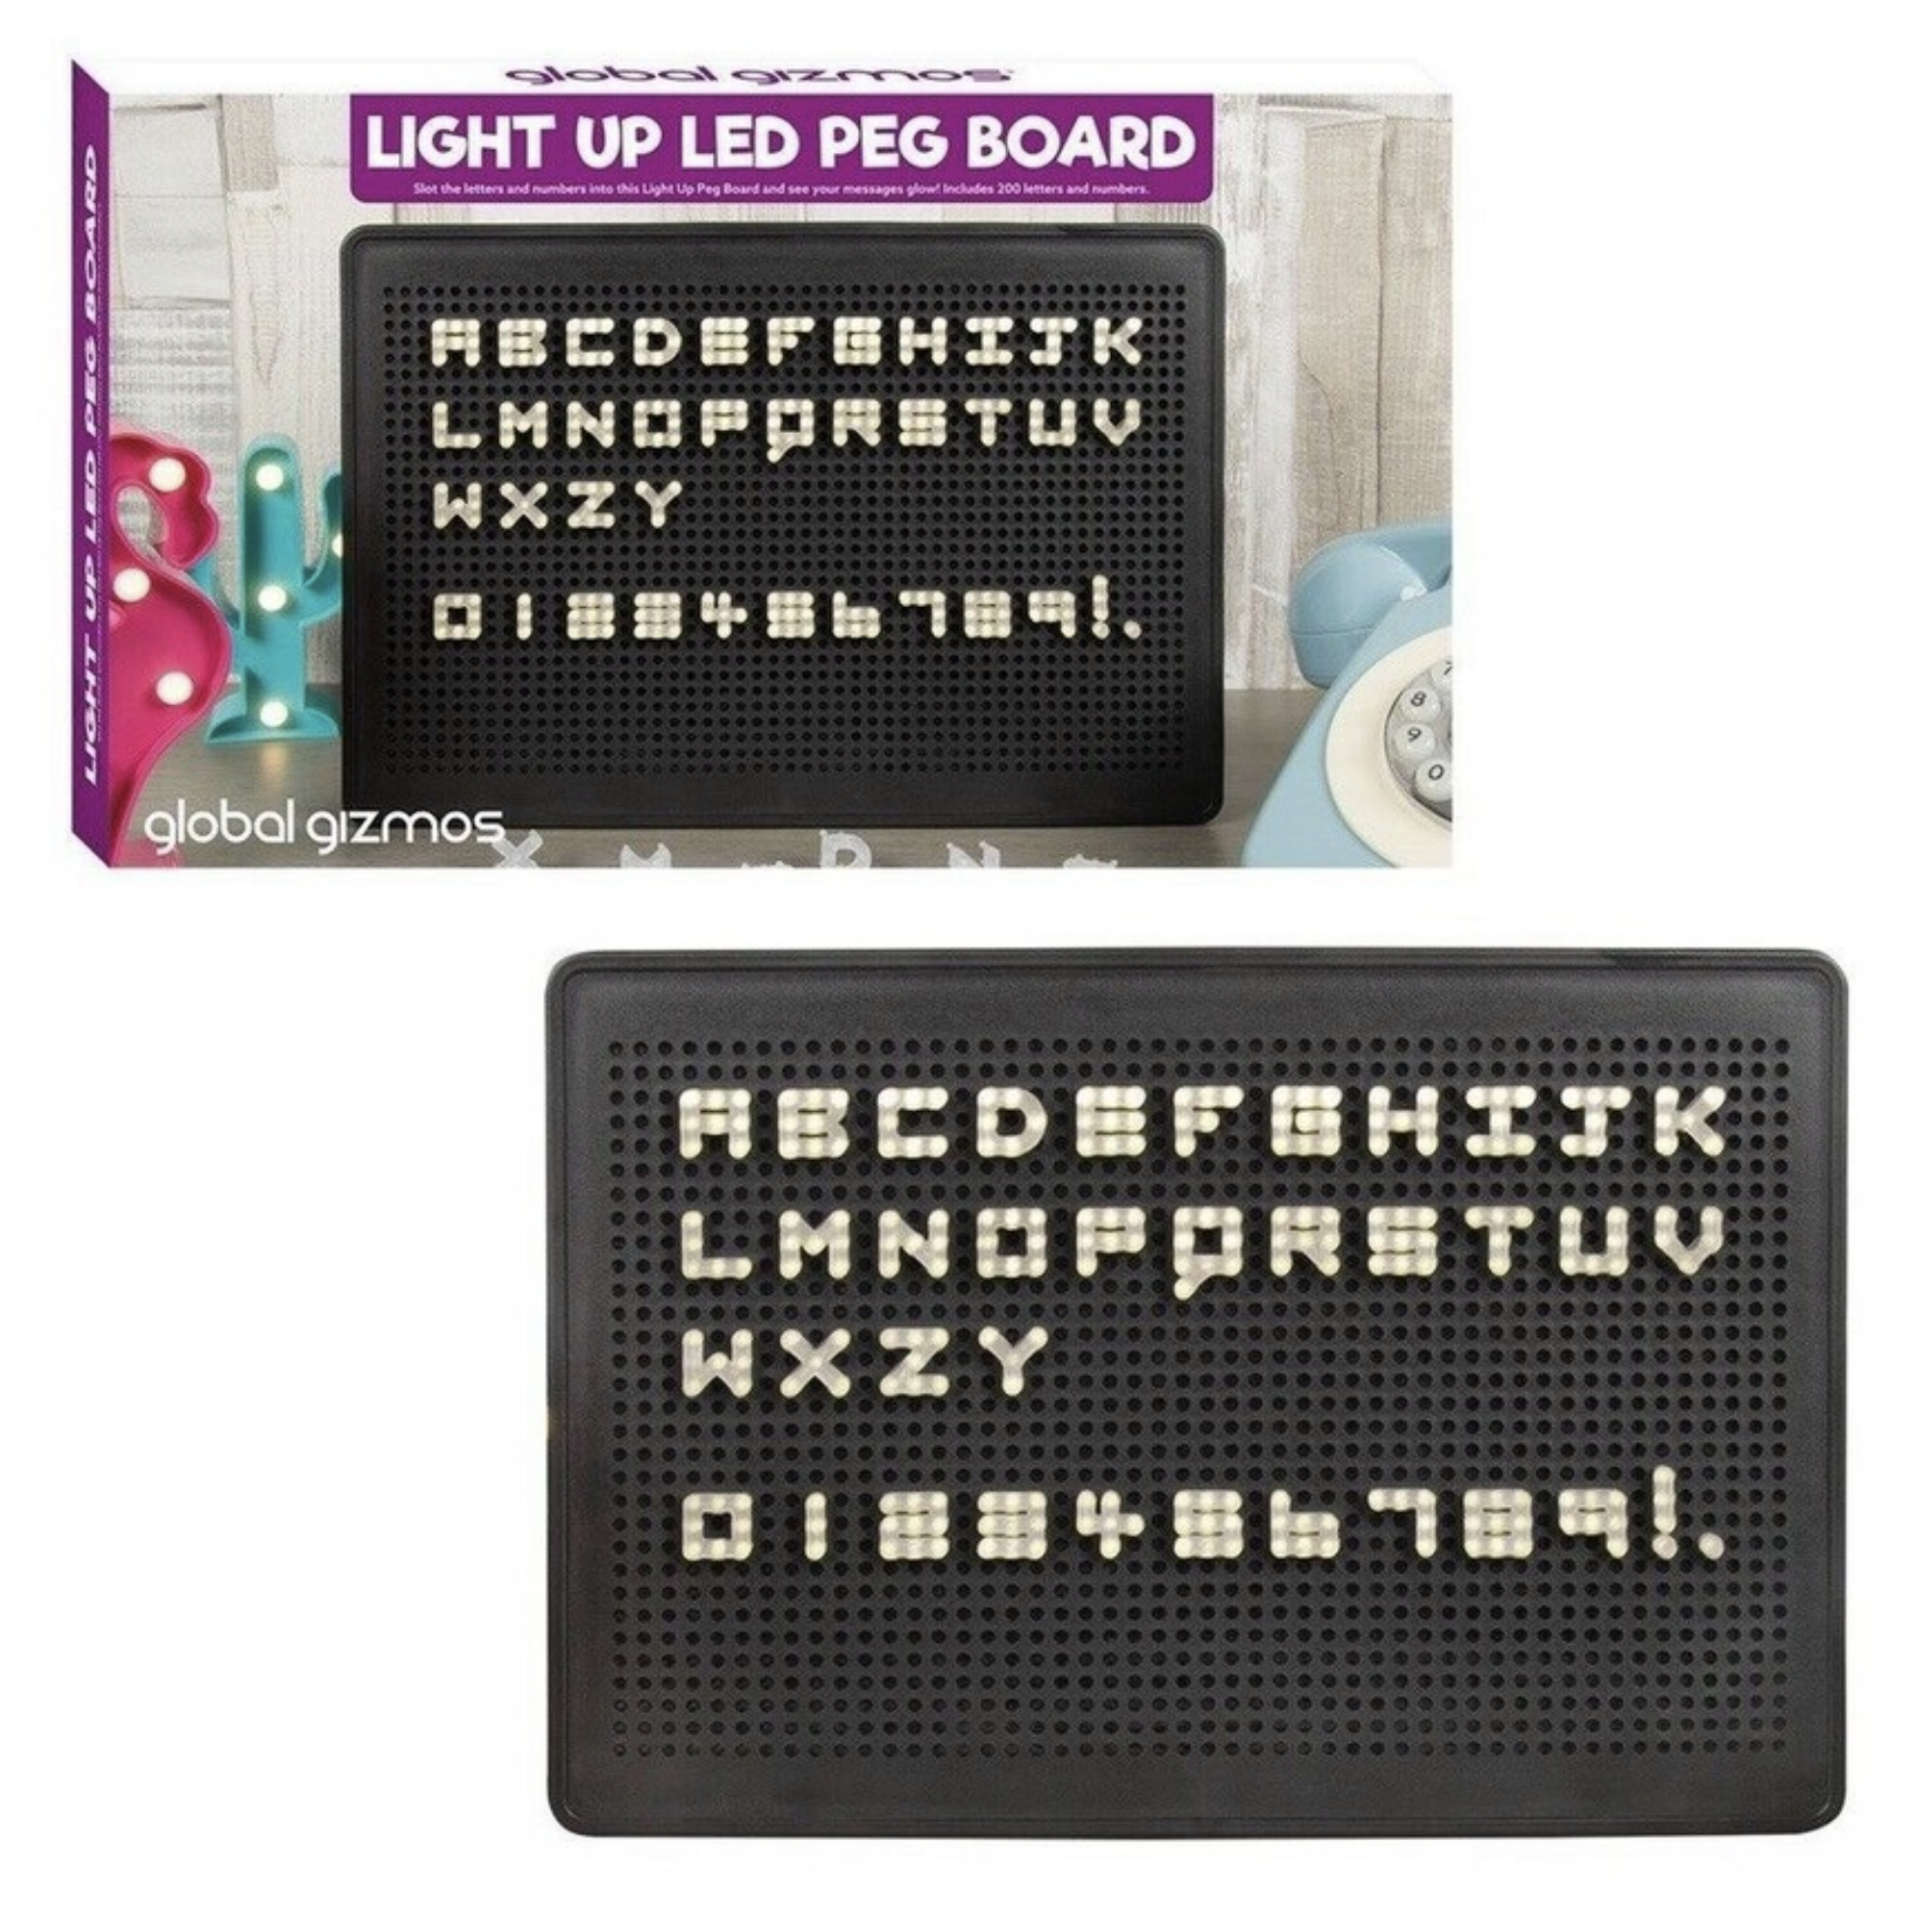 4 x MESSAGE BOARD, LIGHT UP LED PEG BOARD - Image 5 of 5